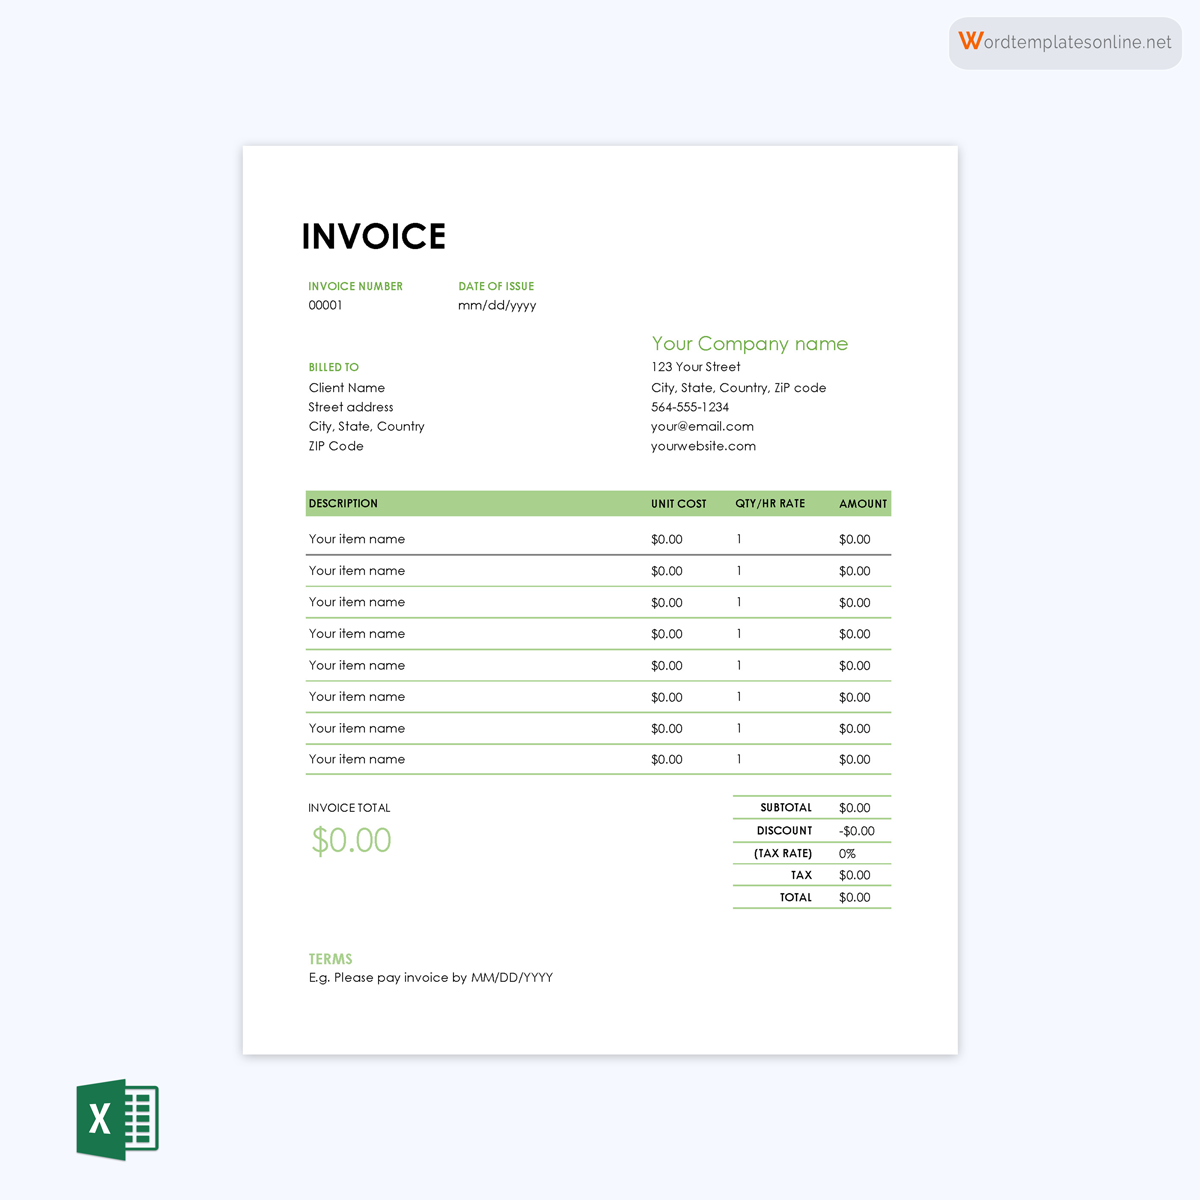 Printable consultant invoice example